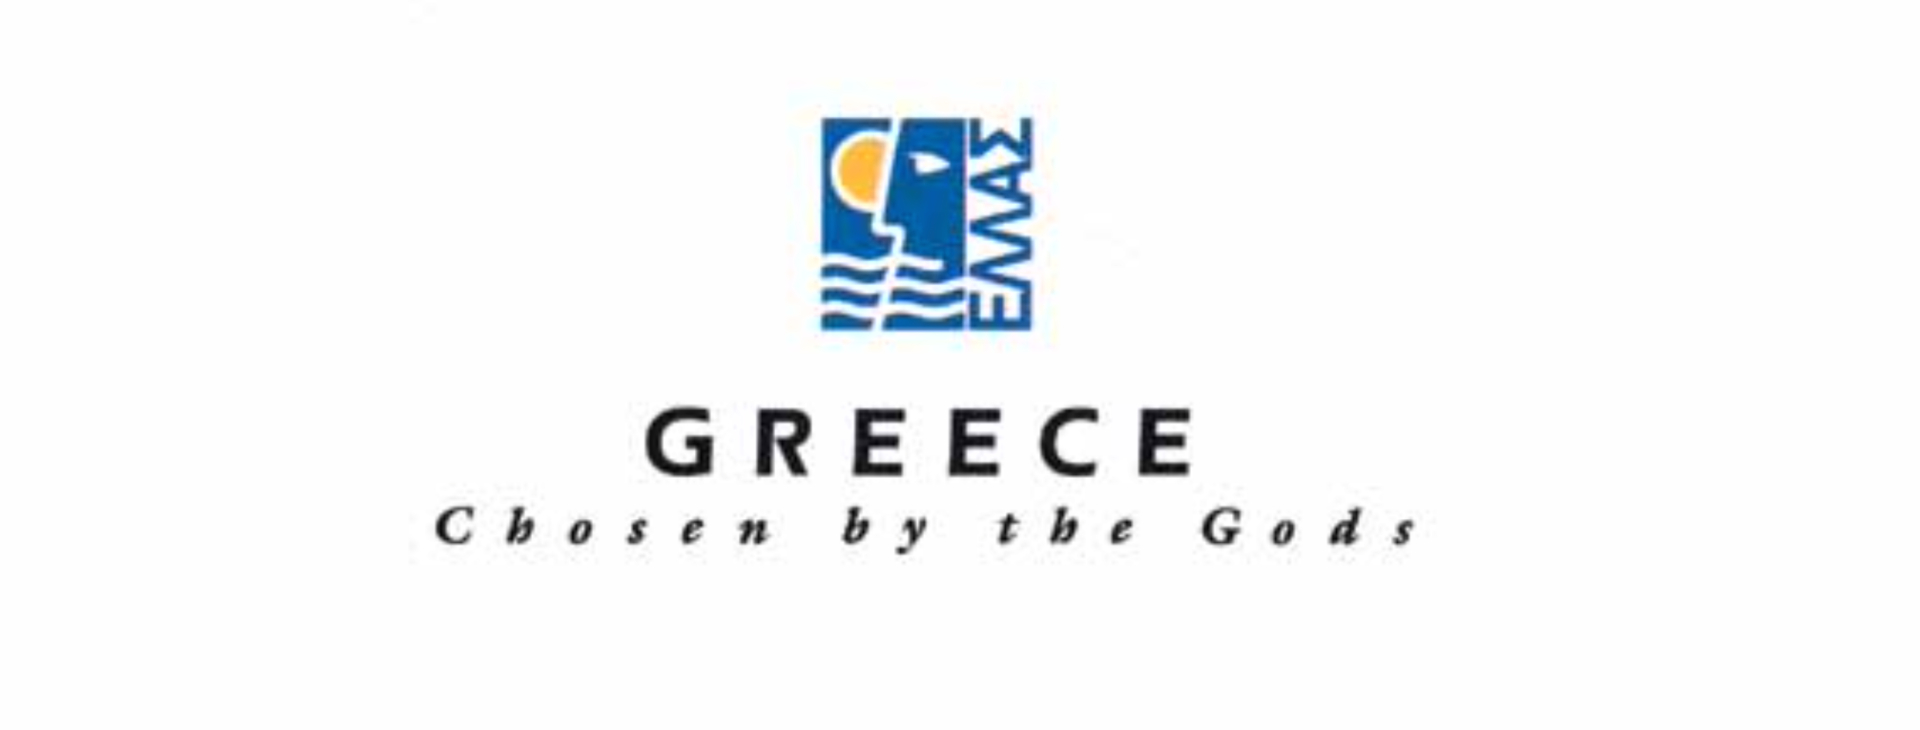 Greece, Chosen By The Gods